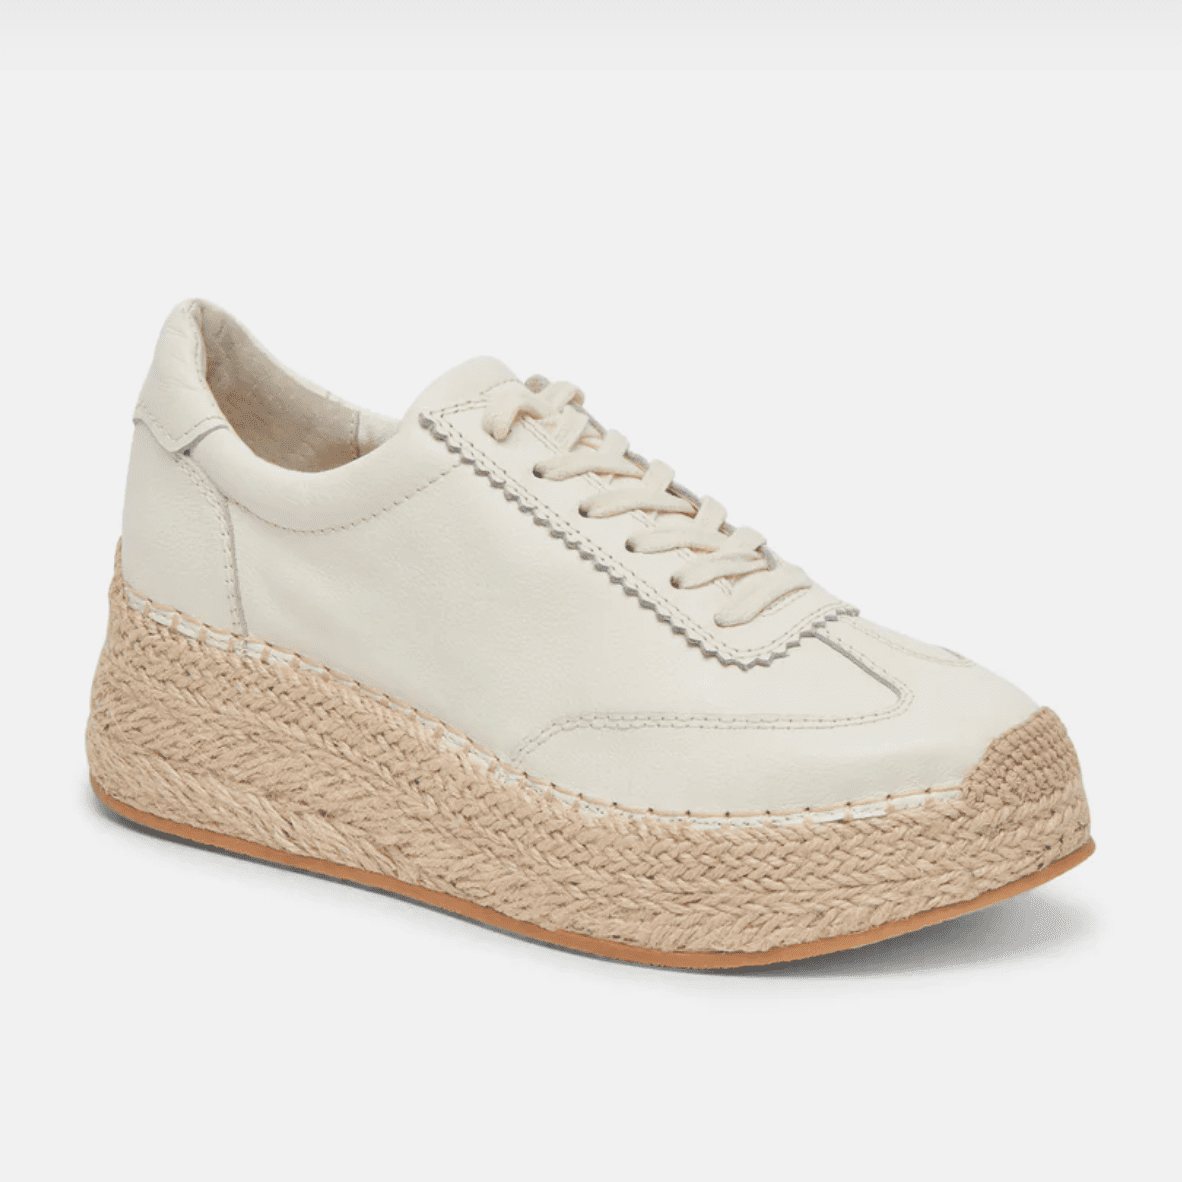 Dolce Vita Jaja Platform Sole Sneakers in White Leather - Jaunts Boutique 